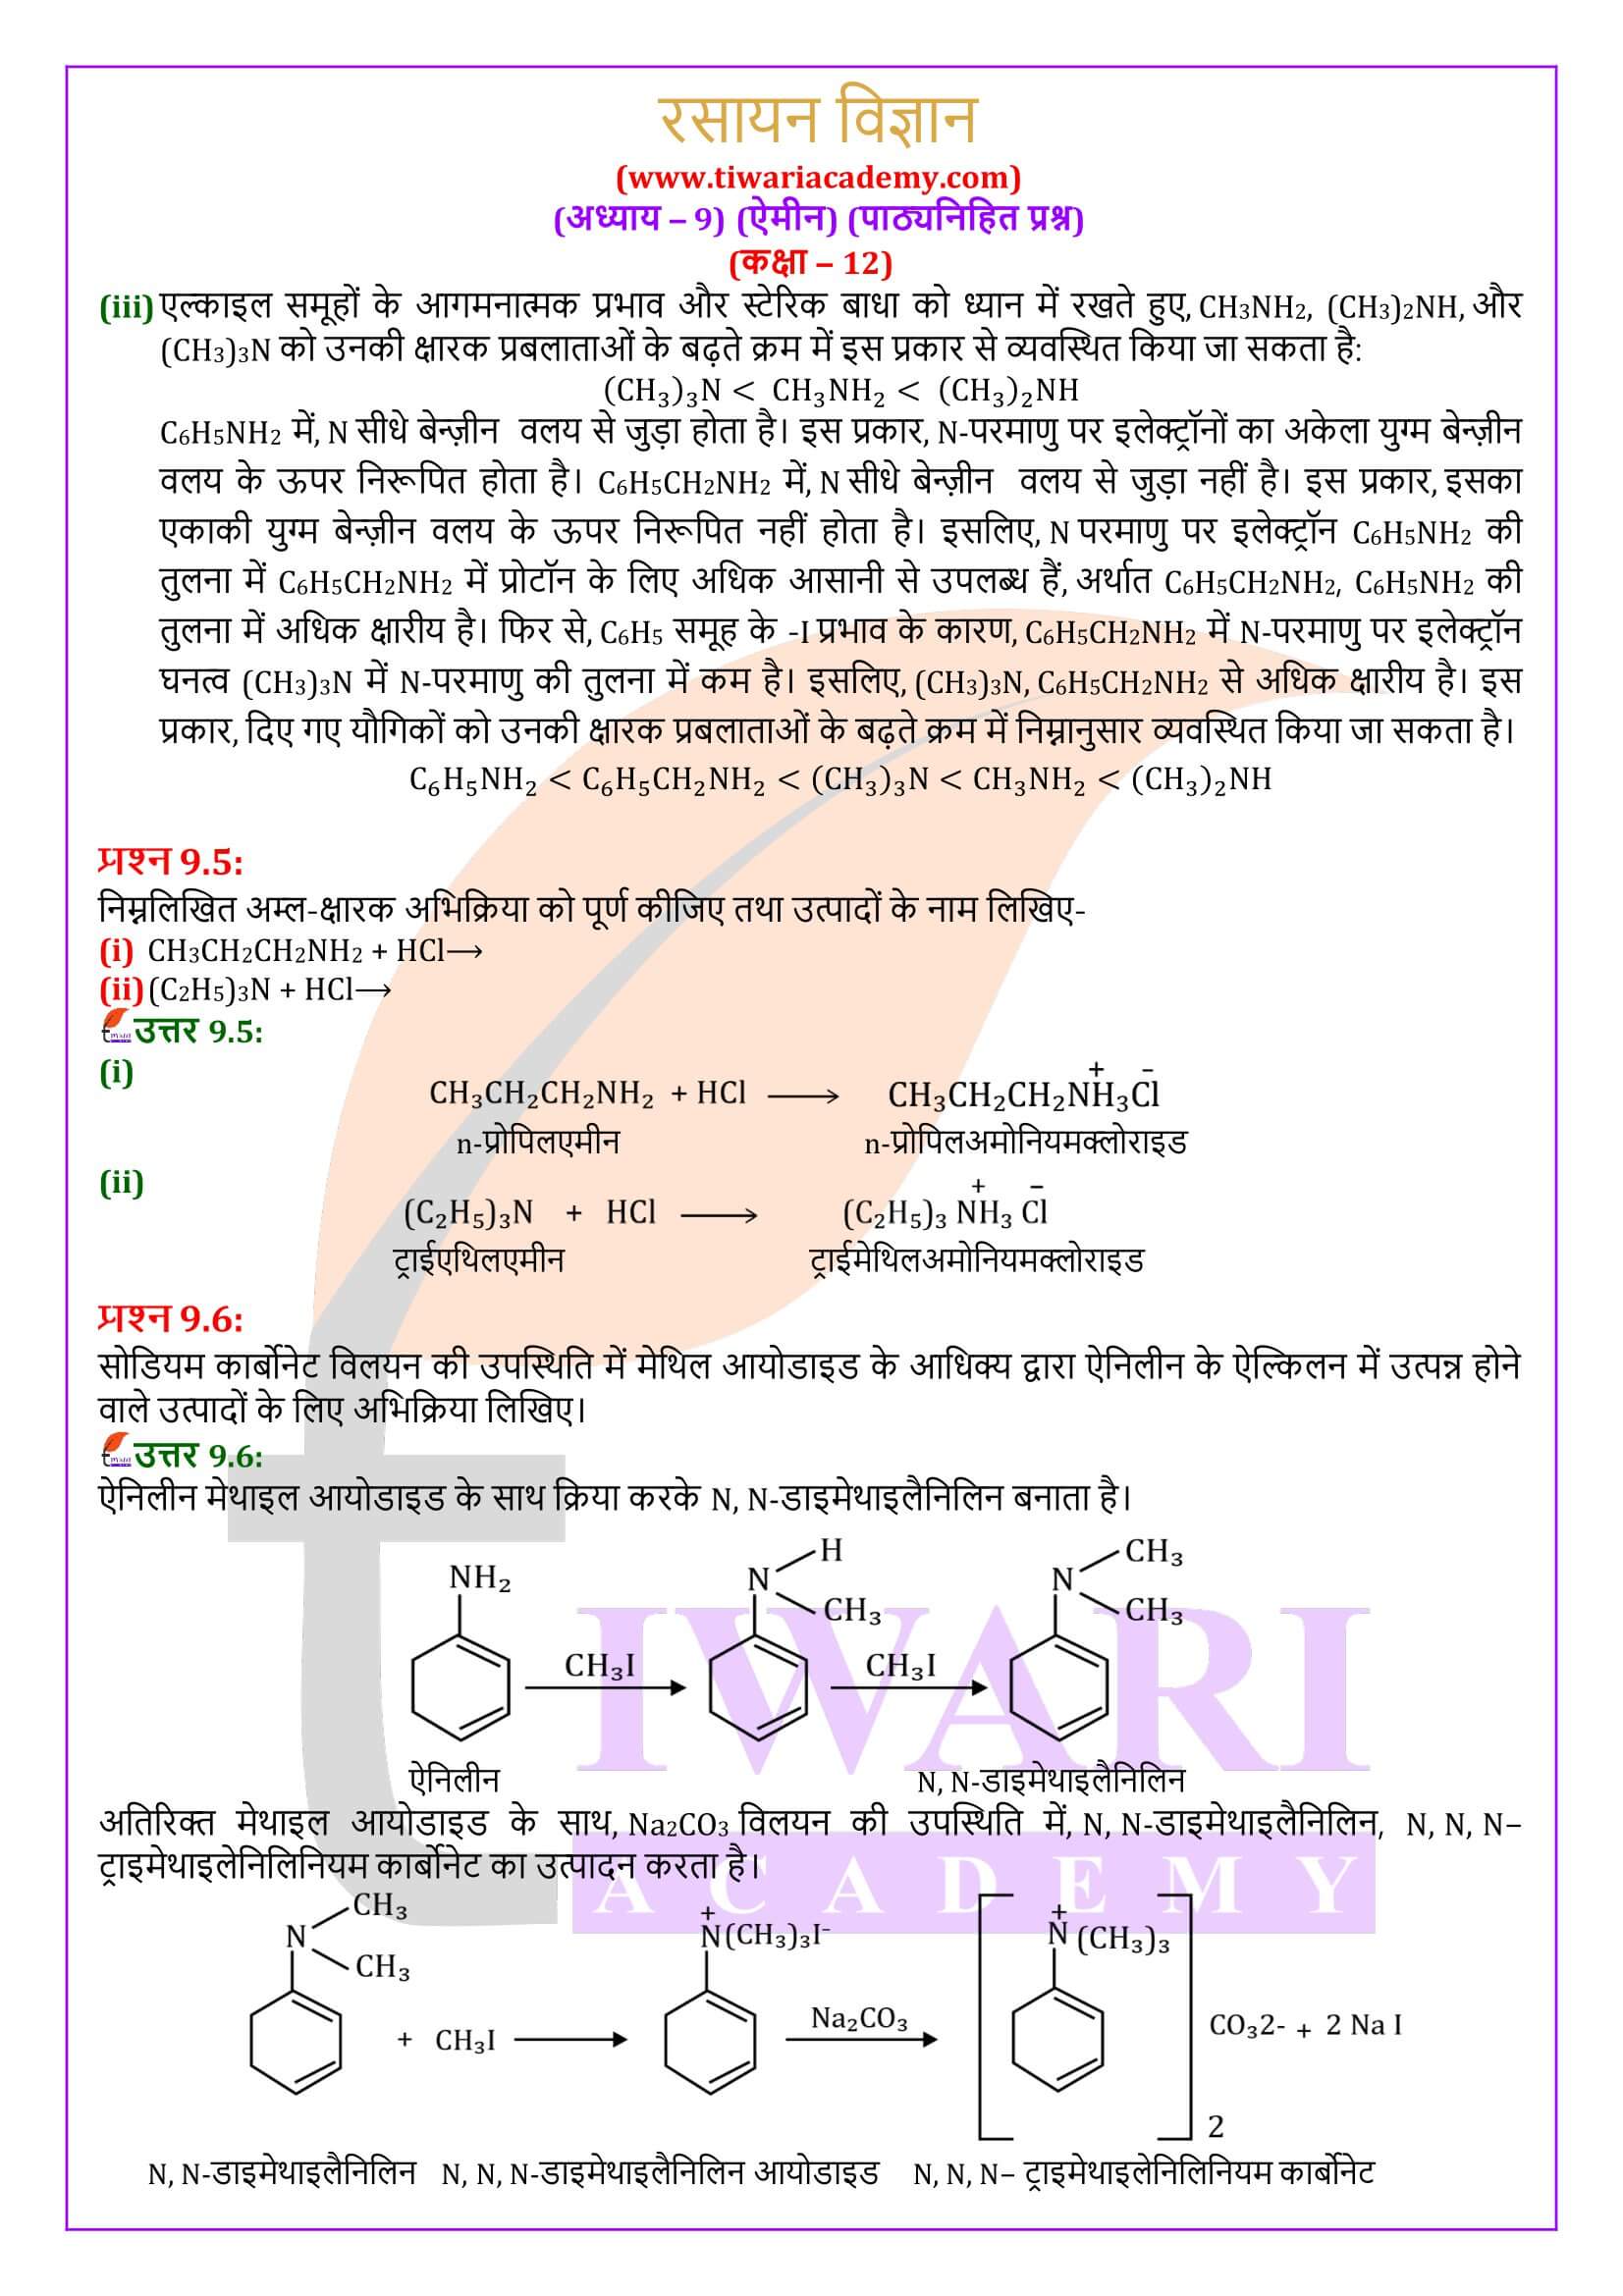 कक्षा 12 रसायन विज्ञान अध्याय 9 पाठ्यनिहित सवाल जवाब